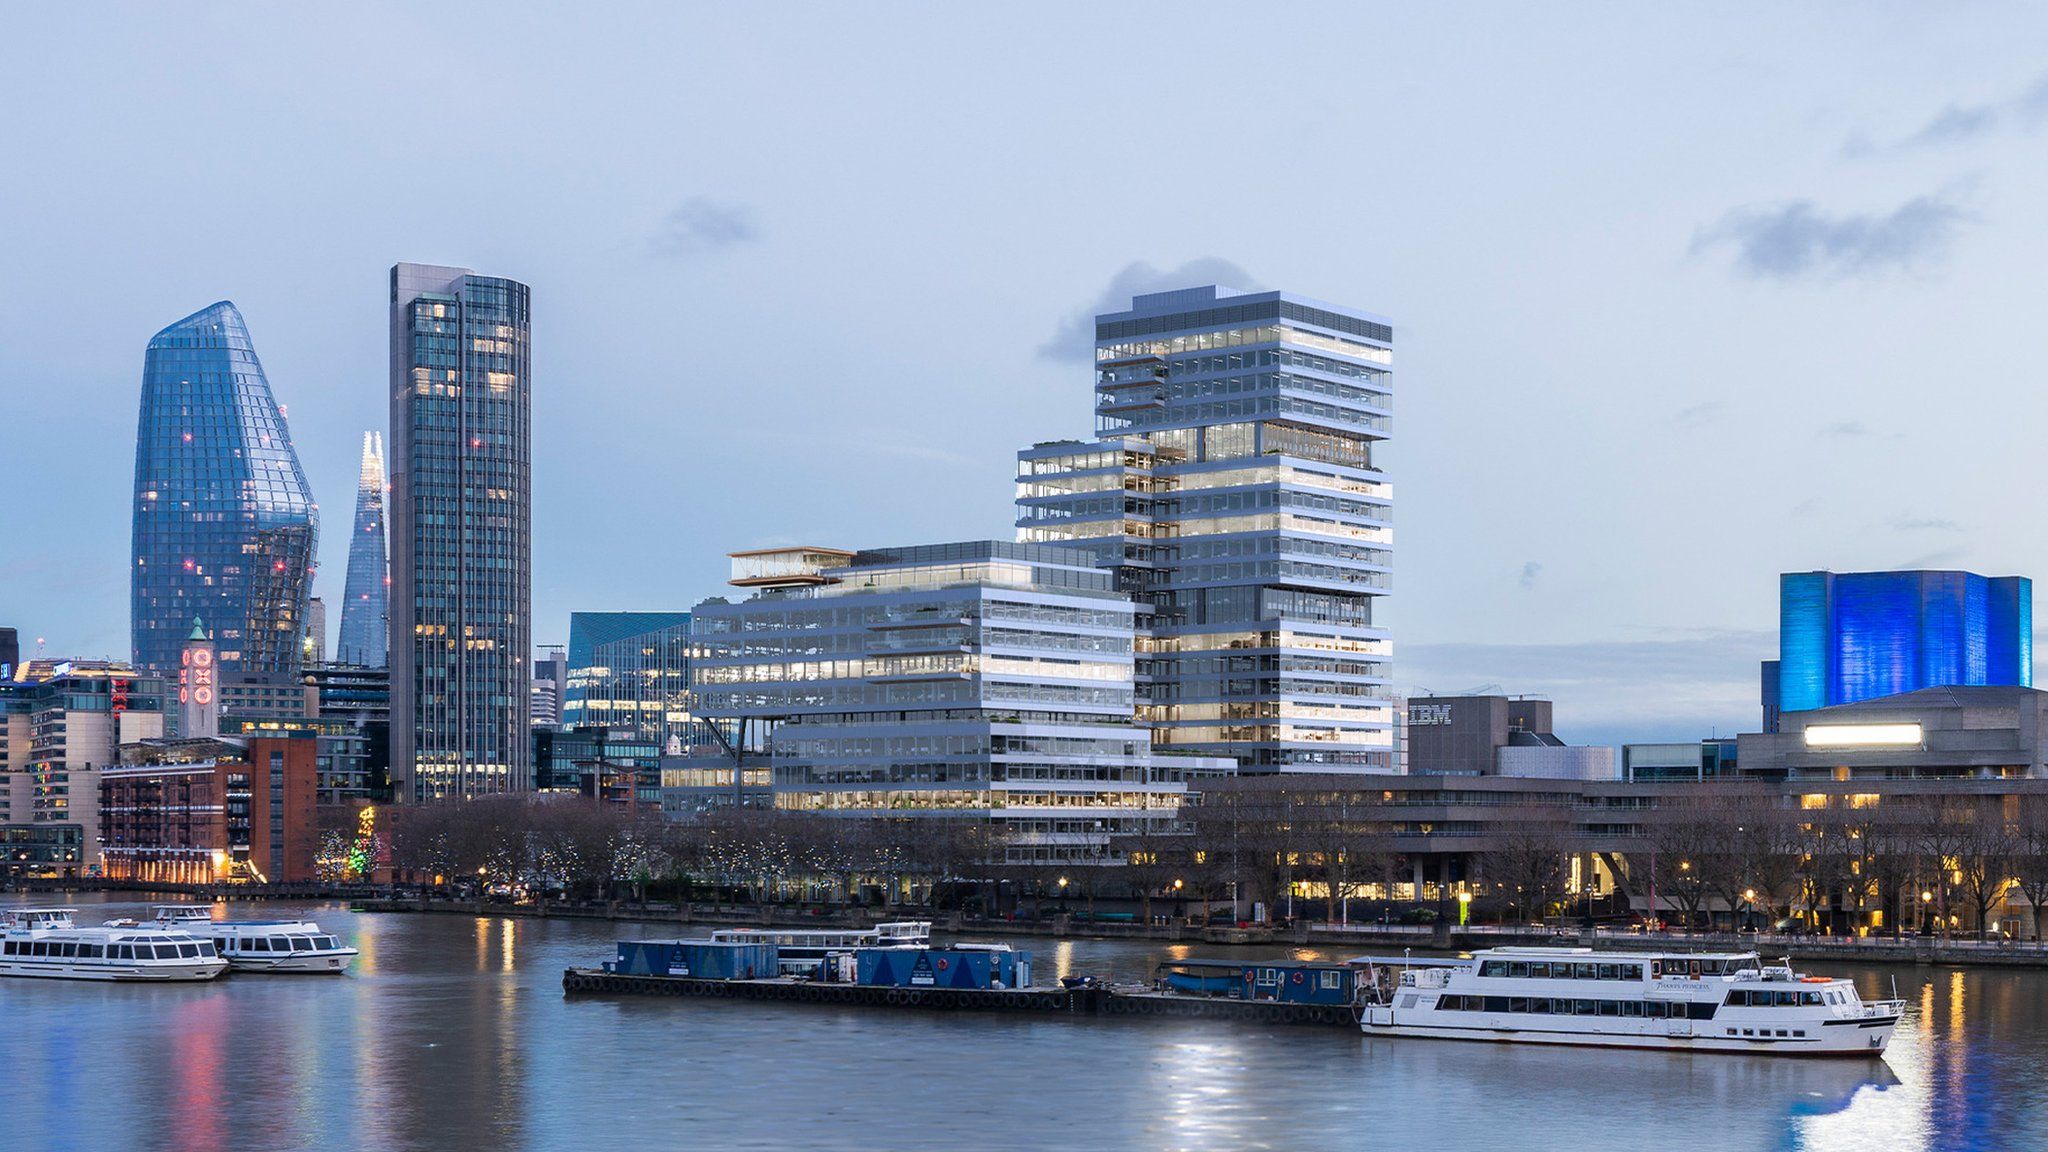 City of London: New 63-floor skyscraper given go ahead - BBC News